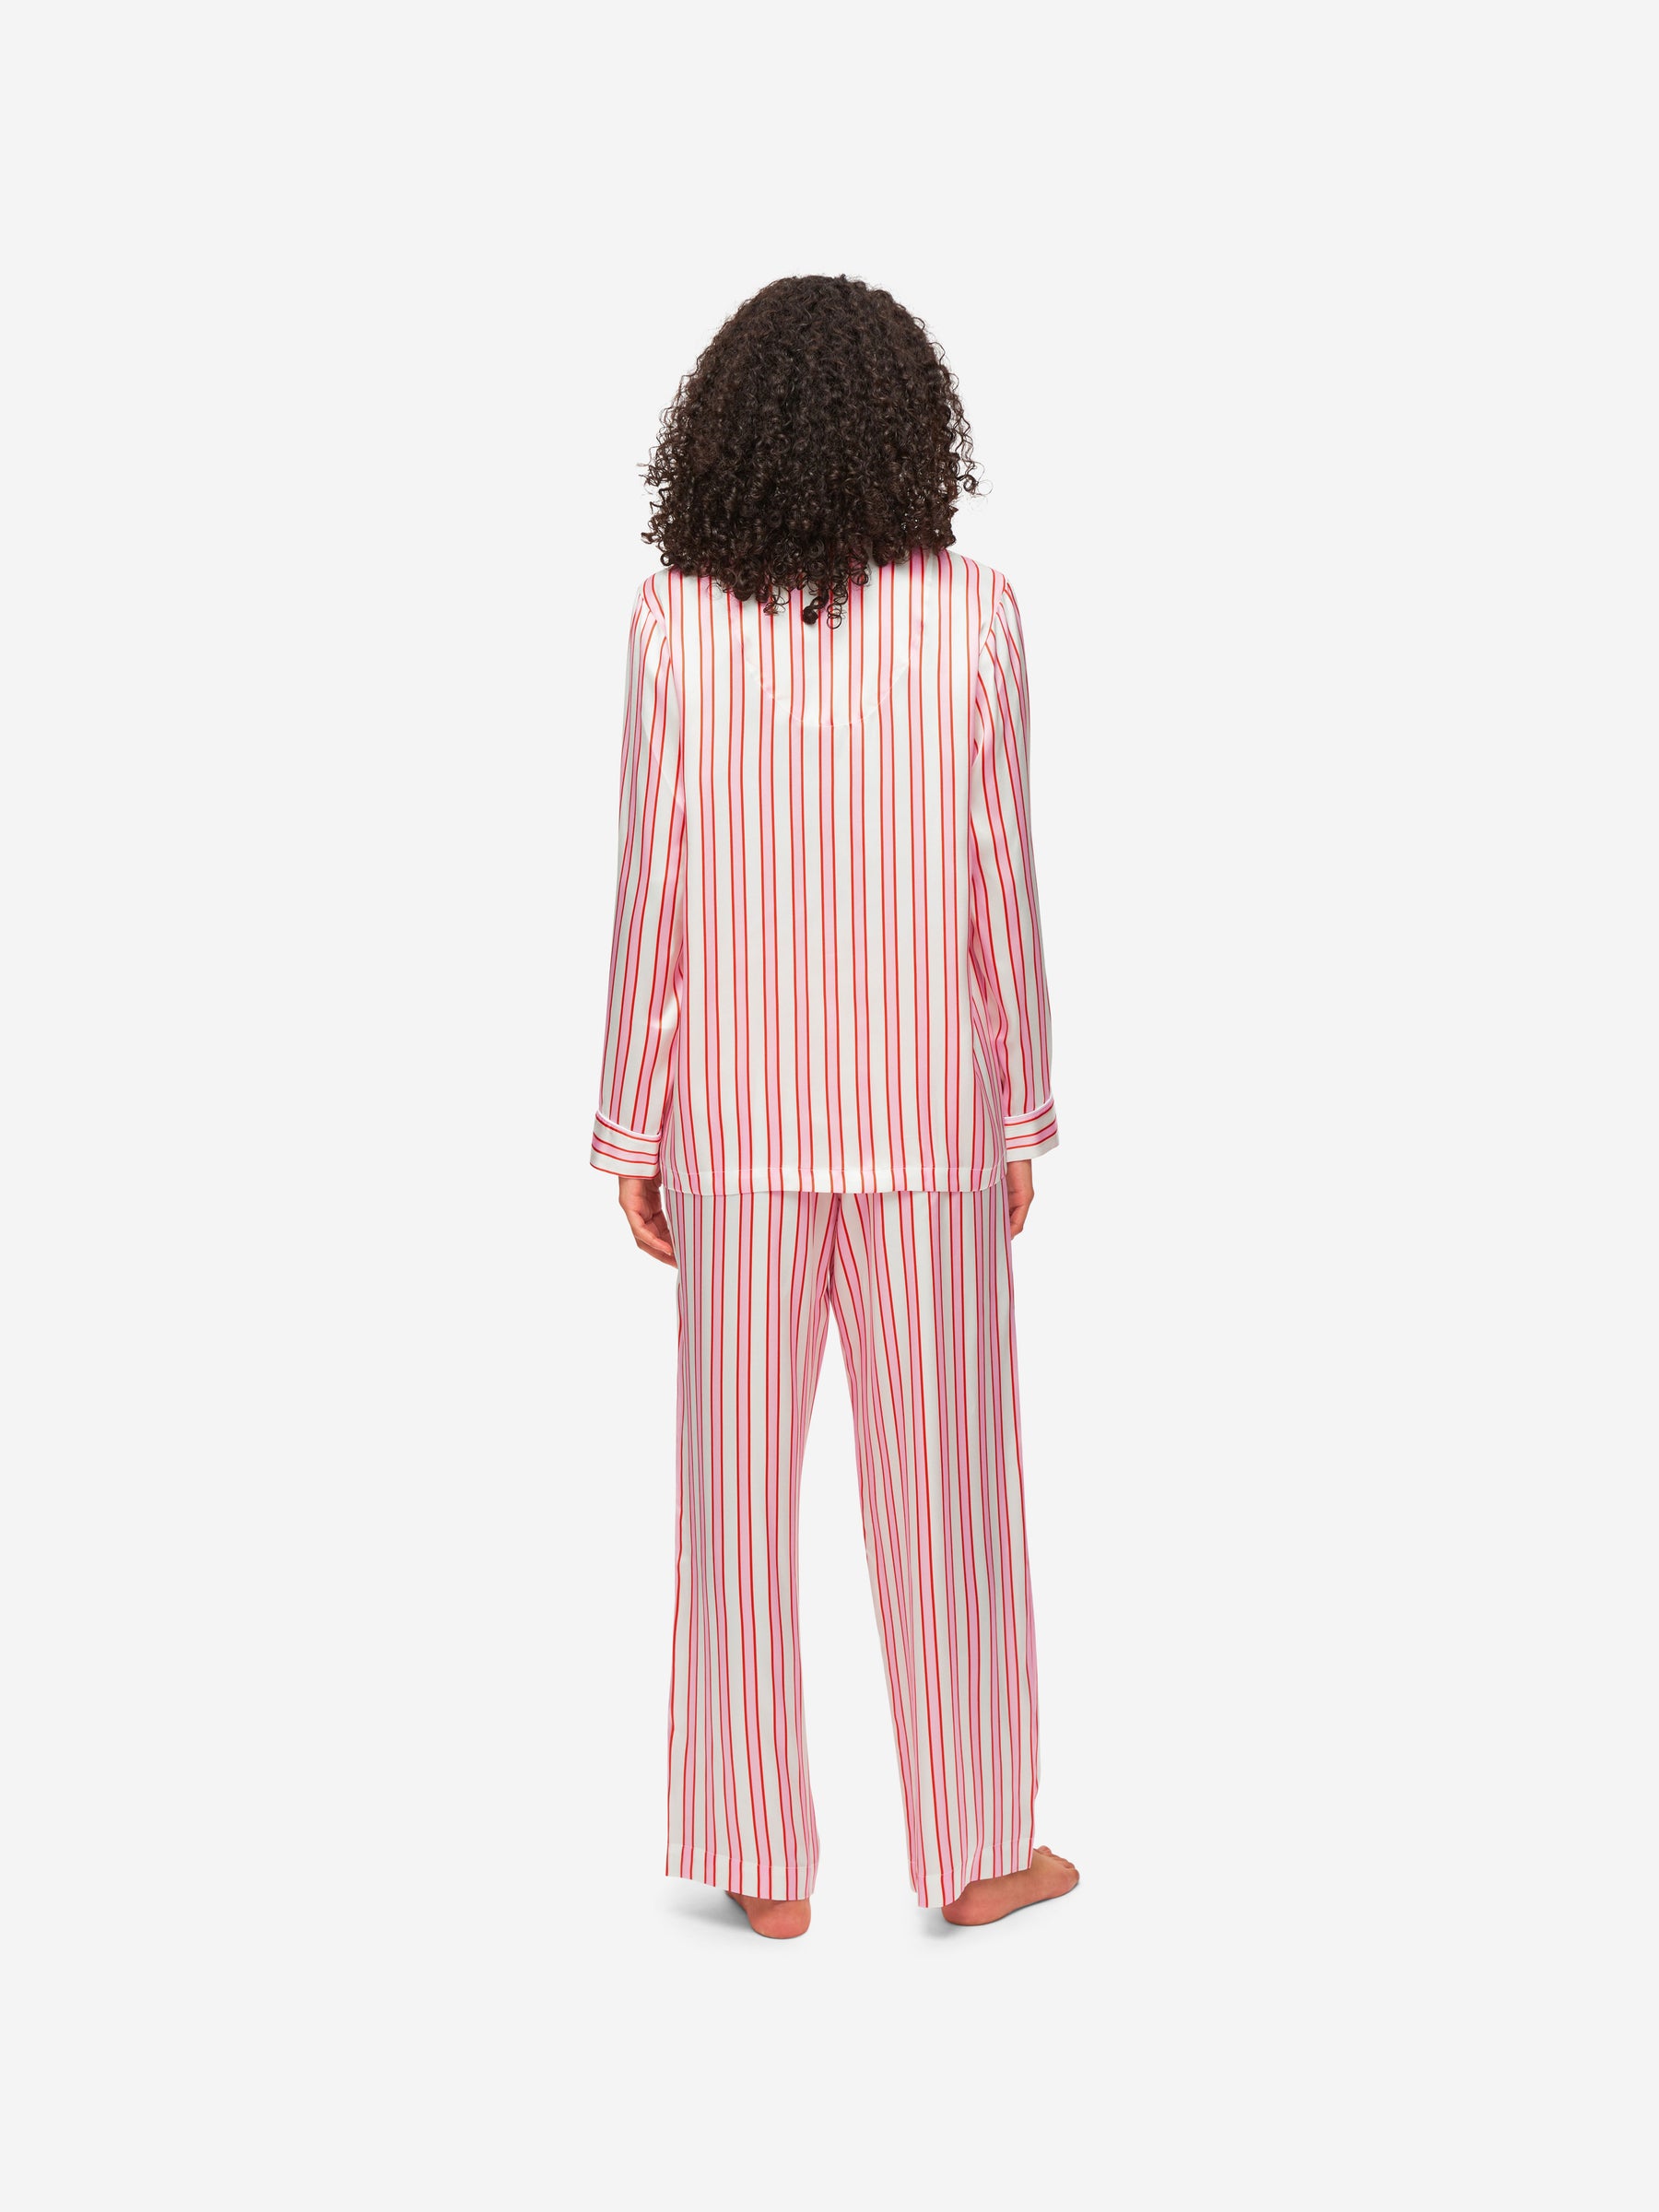 Women's Pyjamas Brindisi 81 Silk Satin Pink